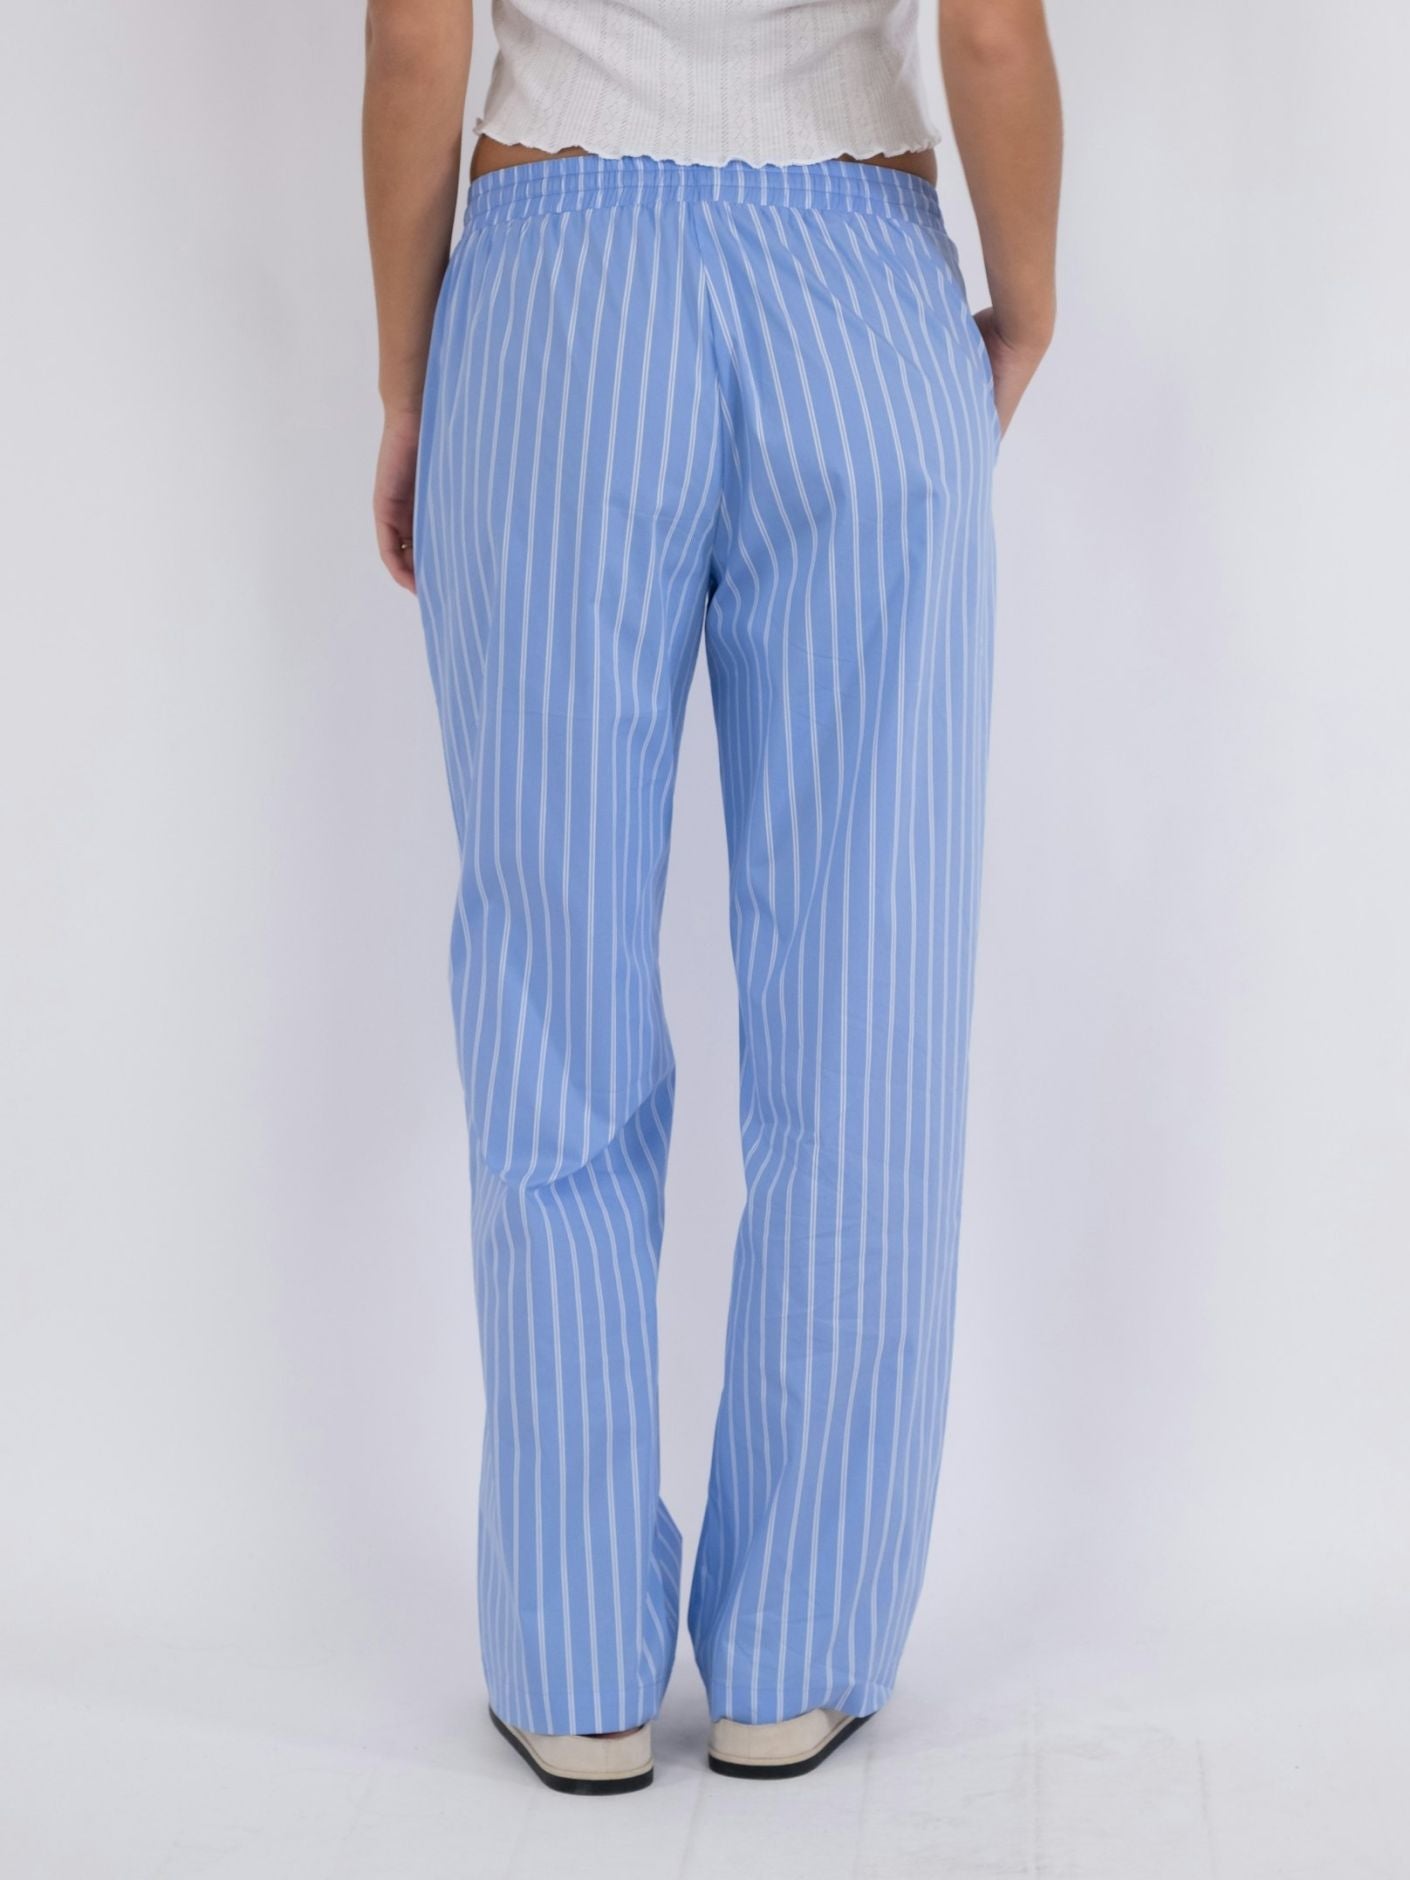 Sonar Double Stripe Pants